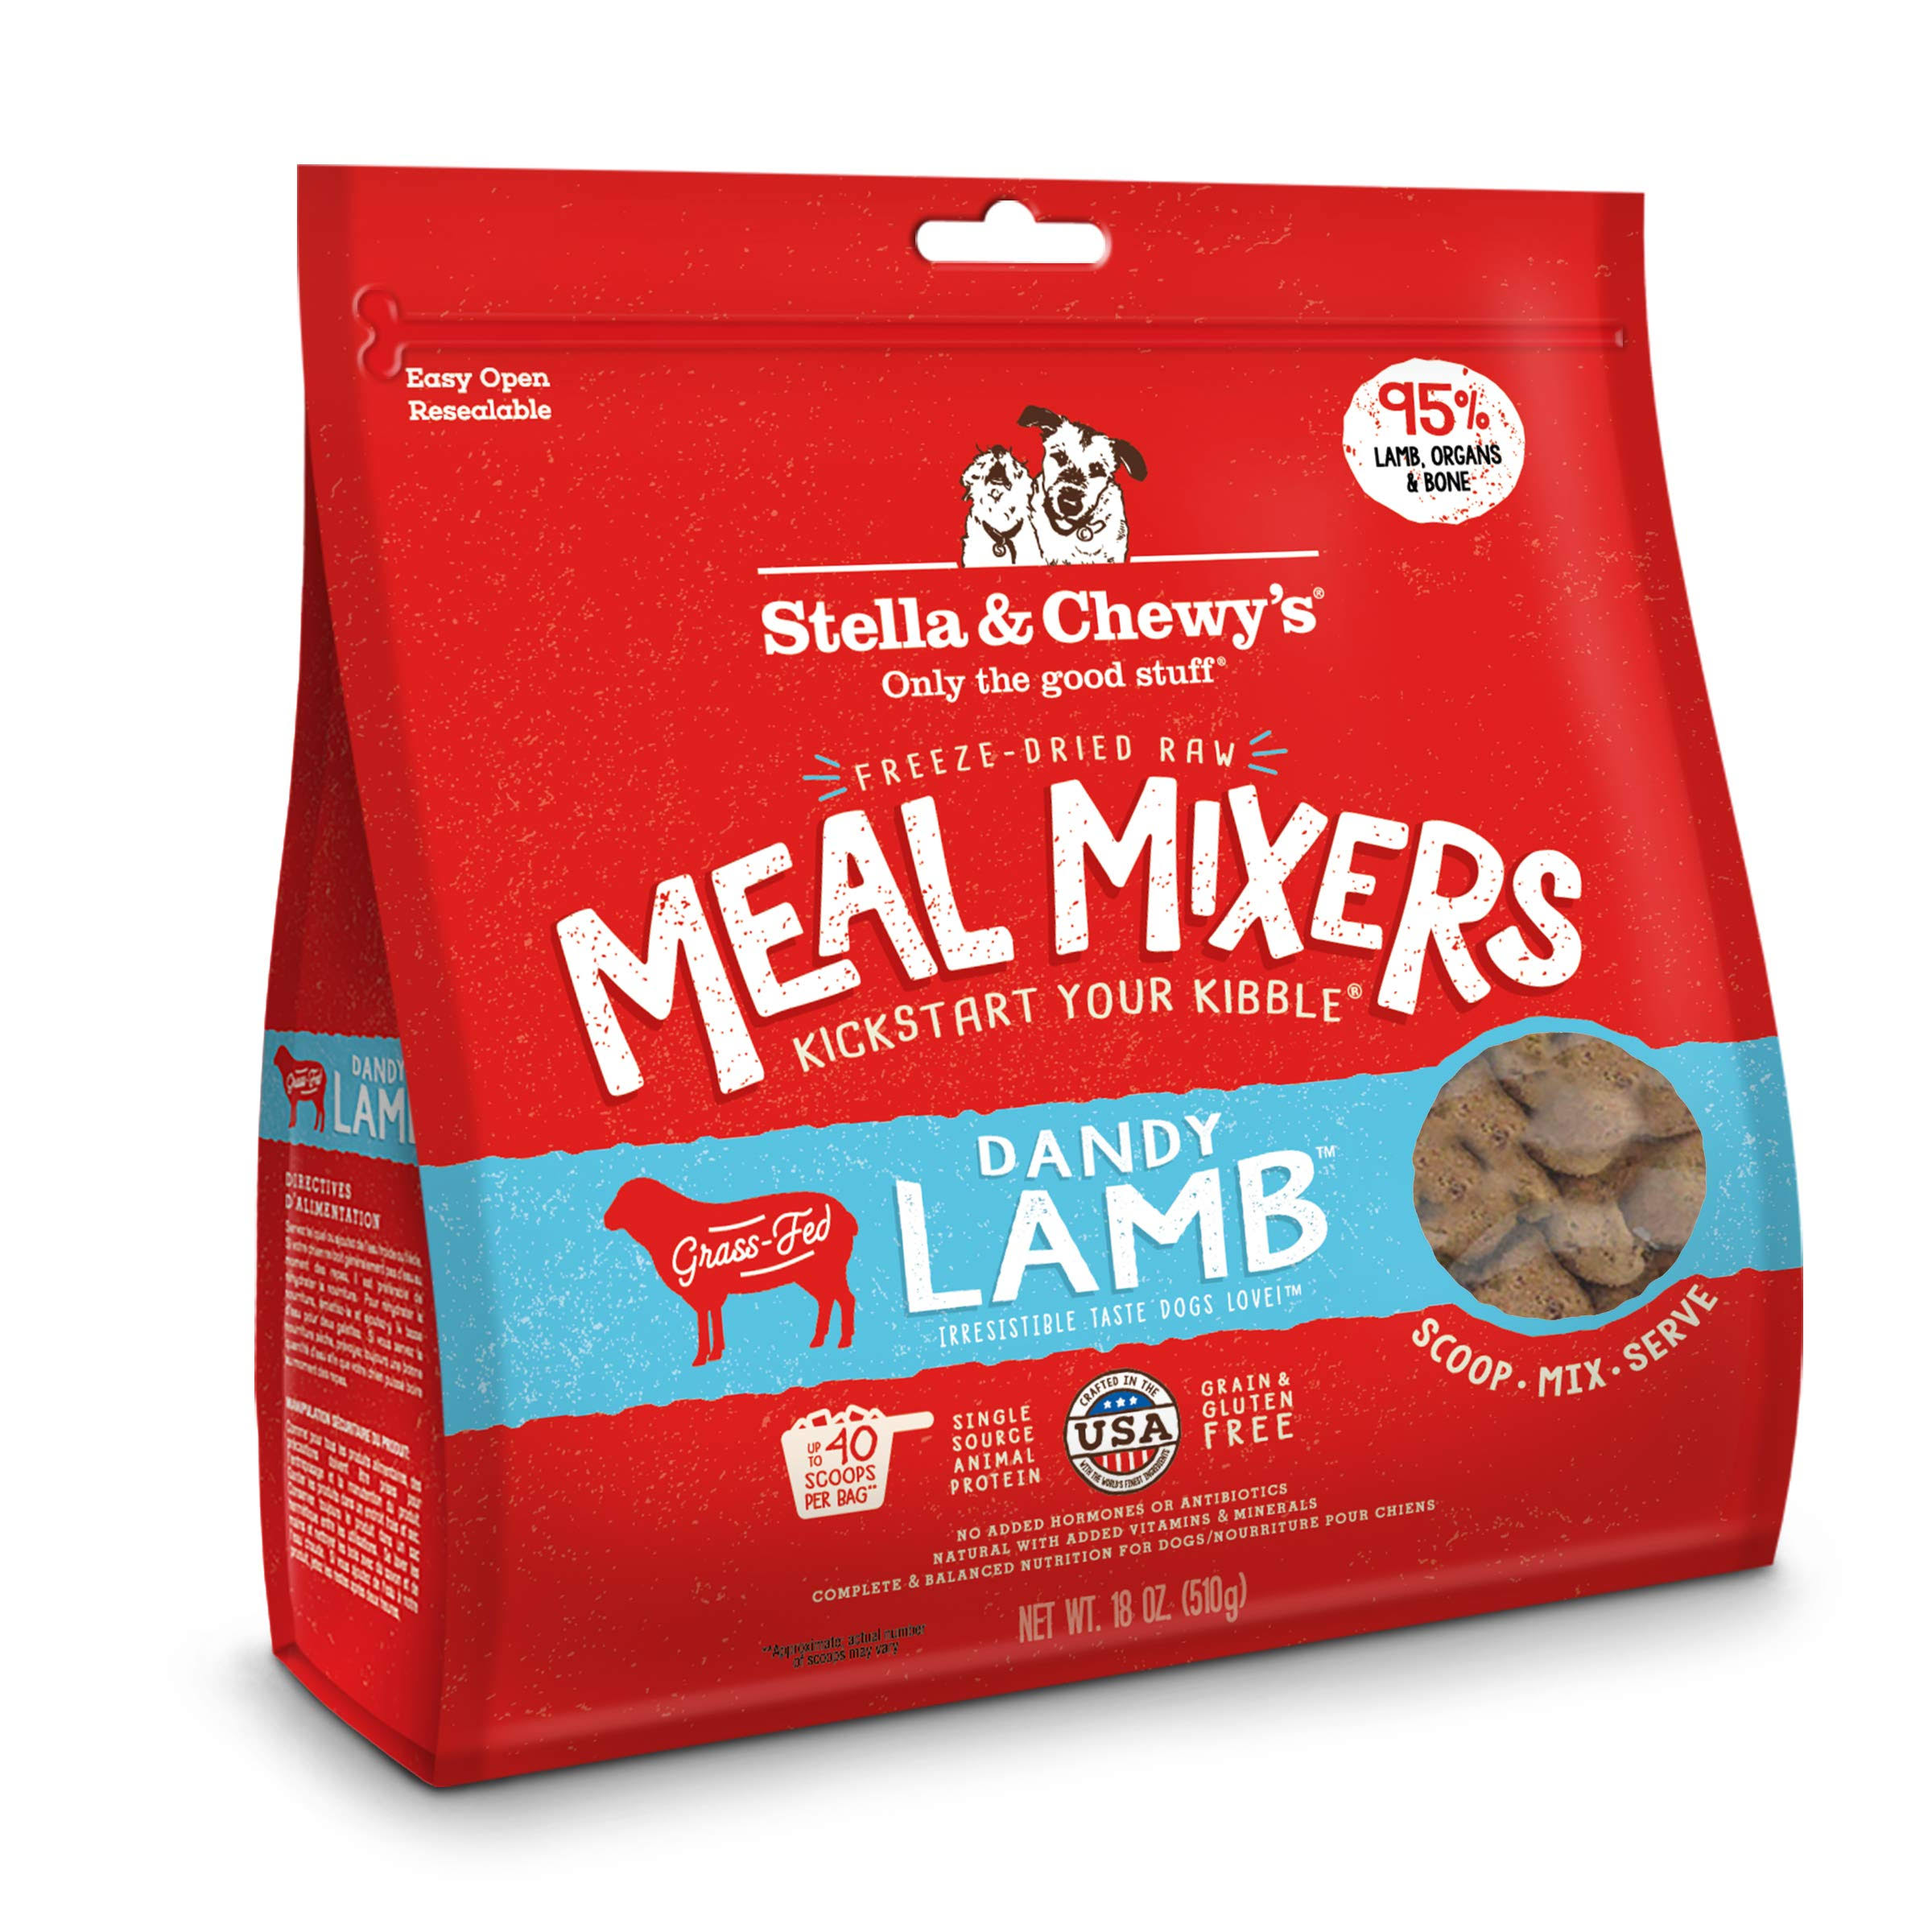 Stella & Chewy's FreezeDried Dog Food Meal Mixers Dandy Lamb 18 oz.